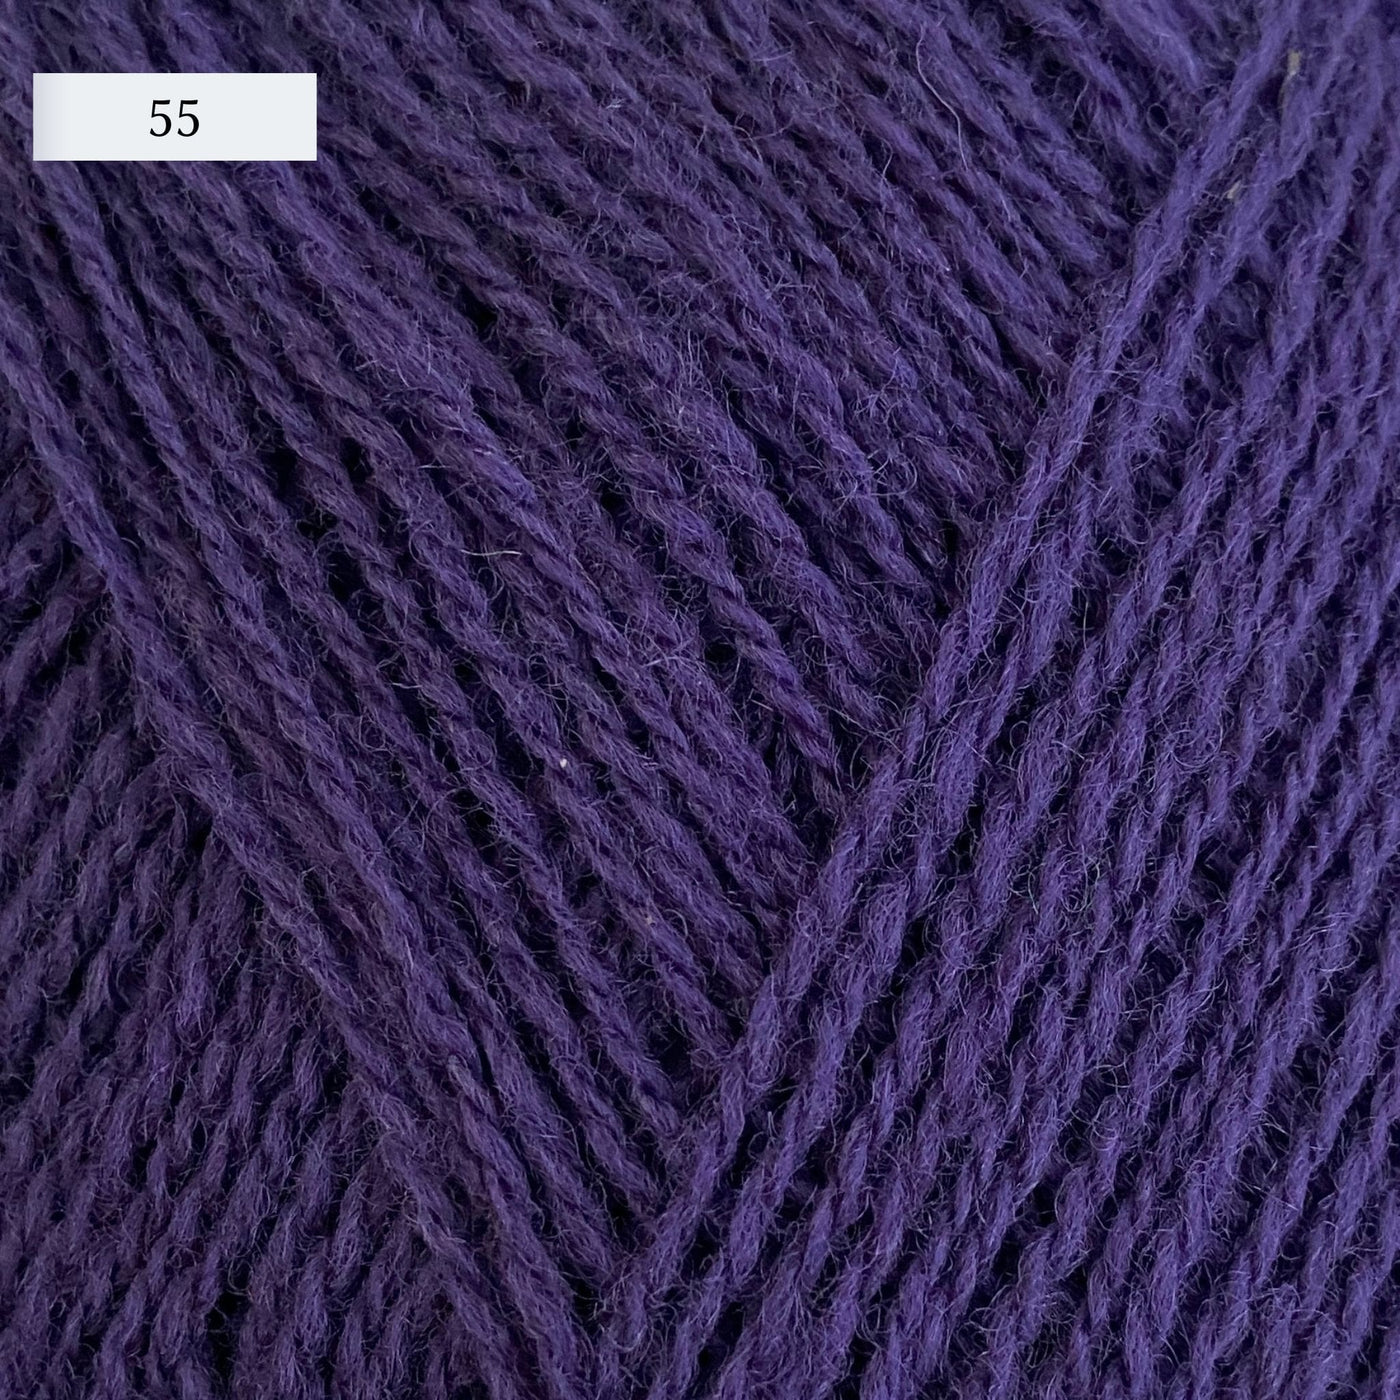 Rauma Lamullgarn, a fingering weight yarn, in color 55, a bright grape purple